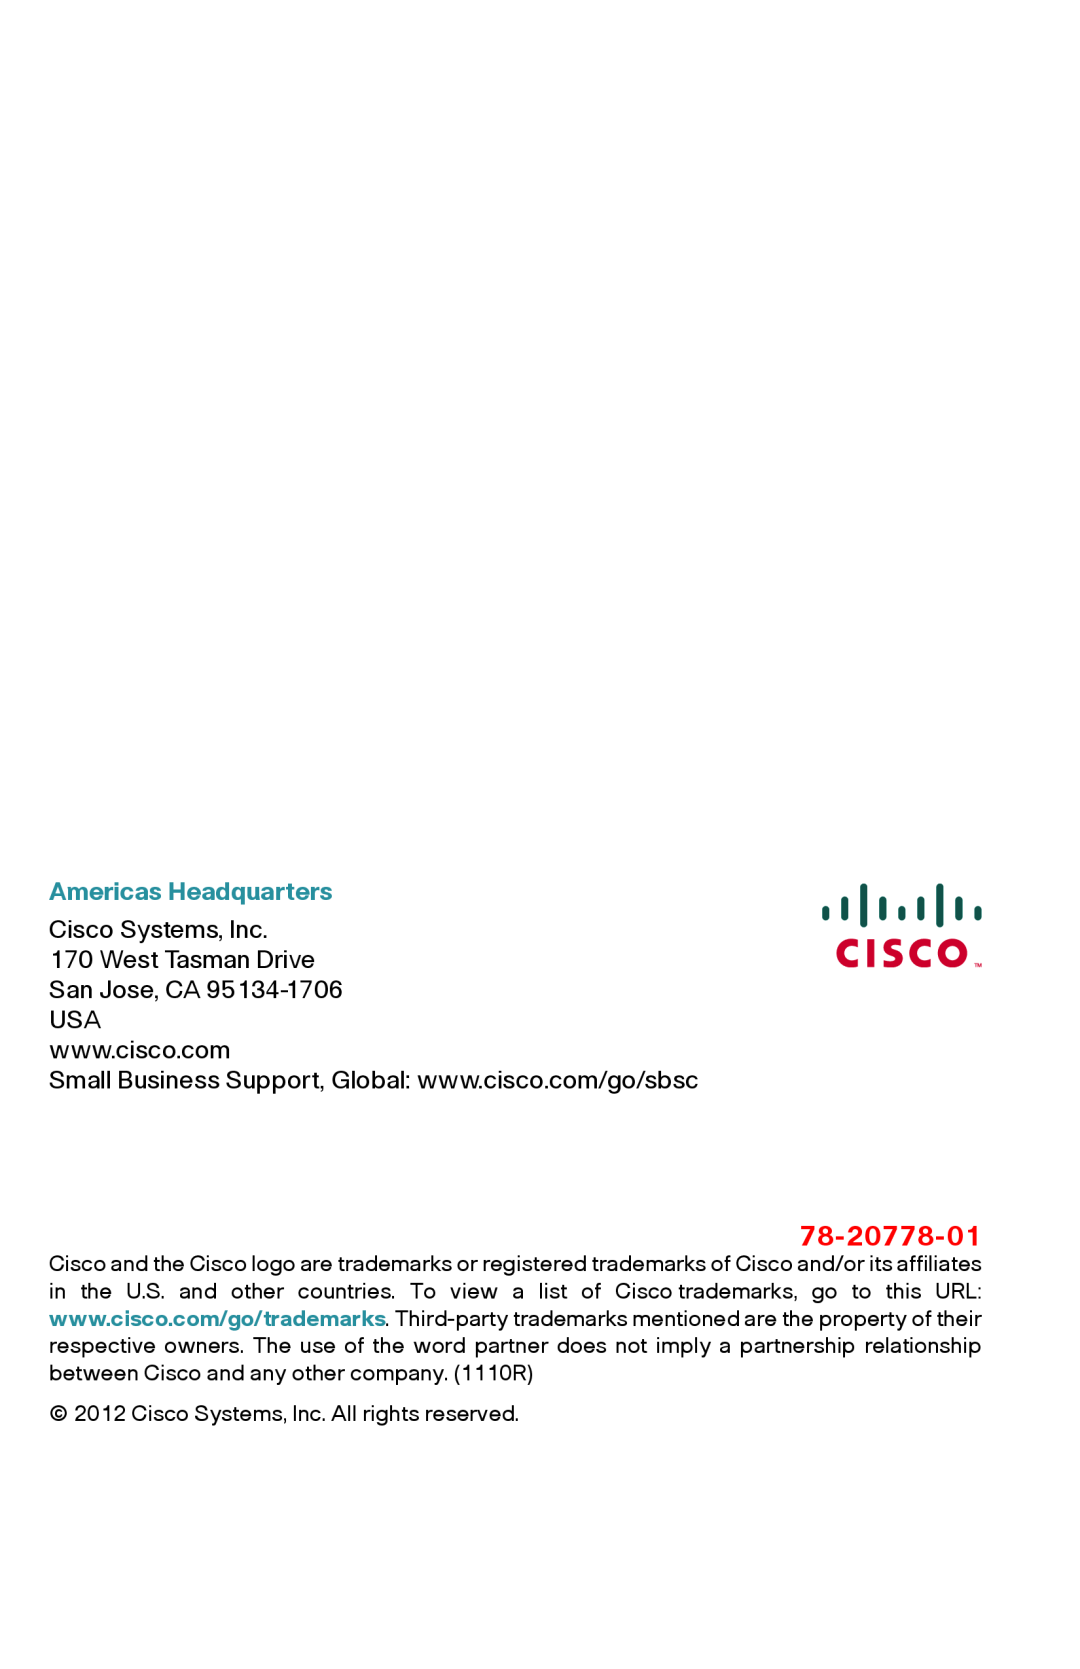 Cisco Systems RV215WAK9NA 78-20778-01, Americas Headquarters, Cisco Systems, Inc 170 West Tasman Drive San Jose, CA 